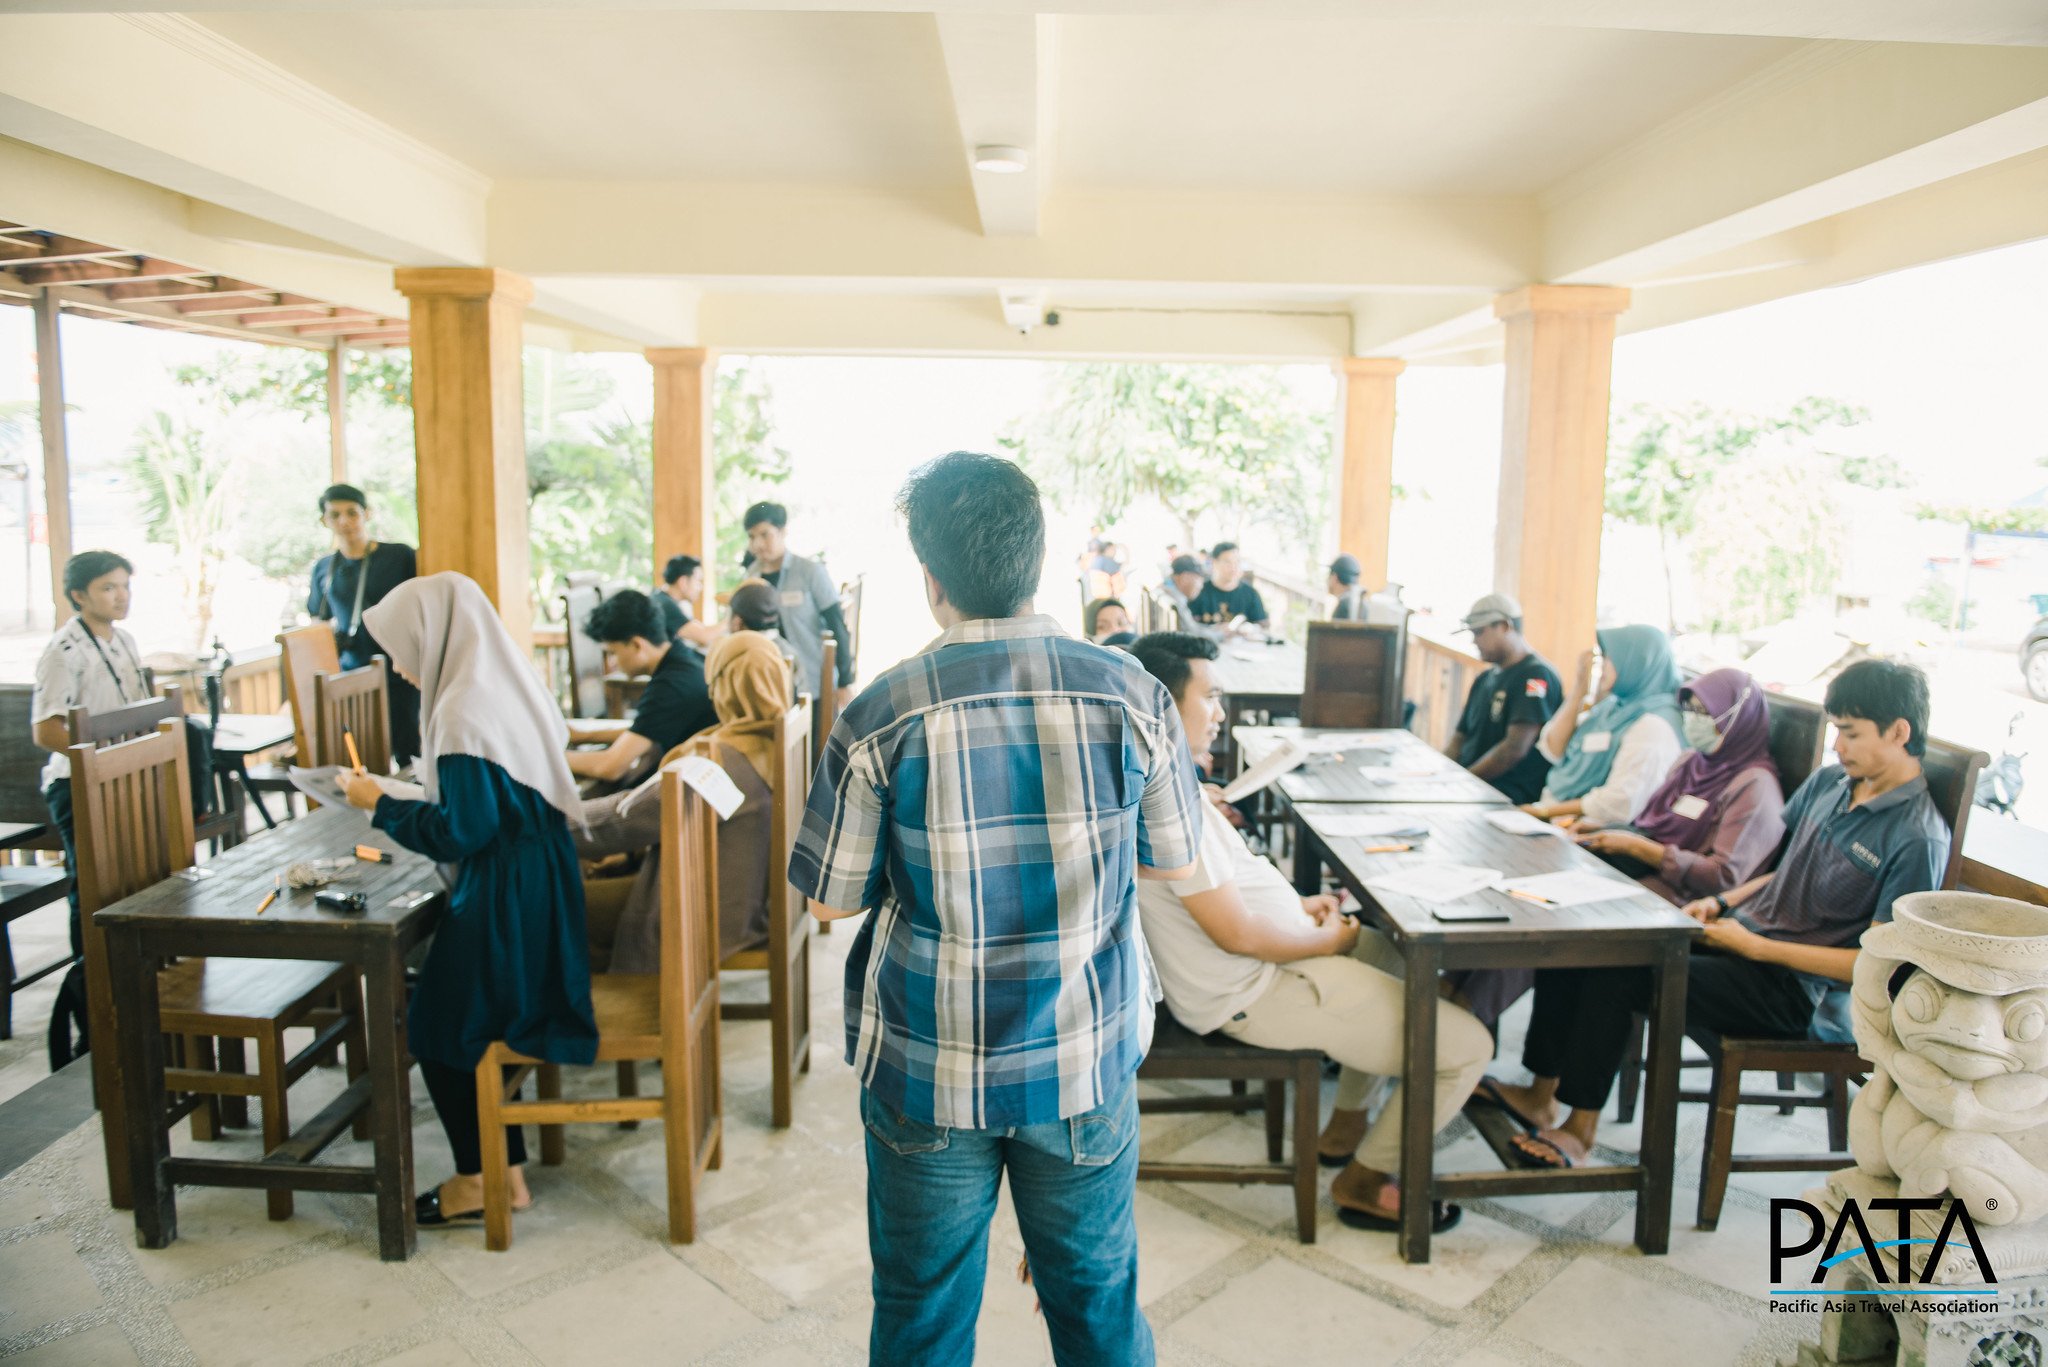 Informal Workers Programme in Jakarta, Indonesia